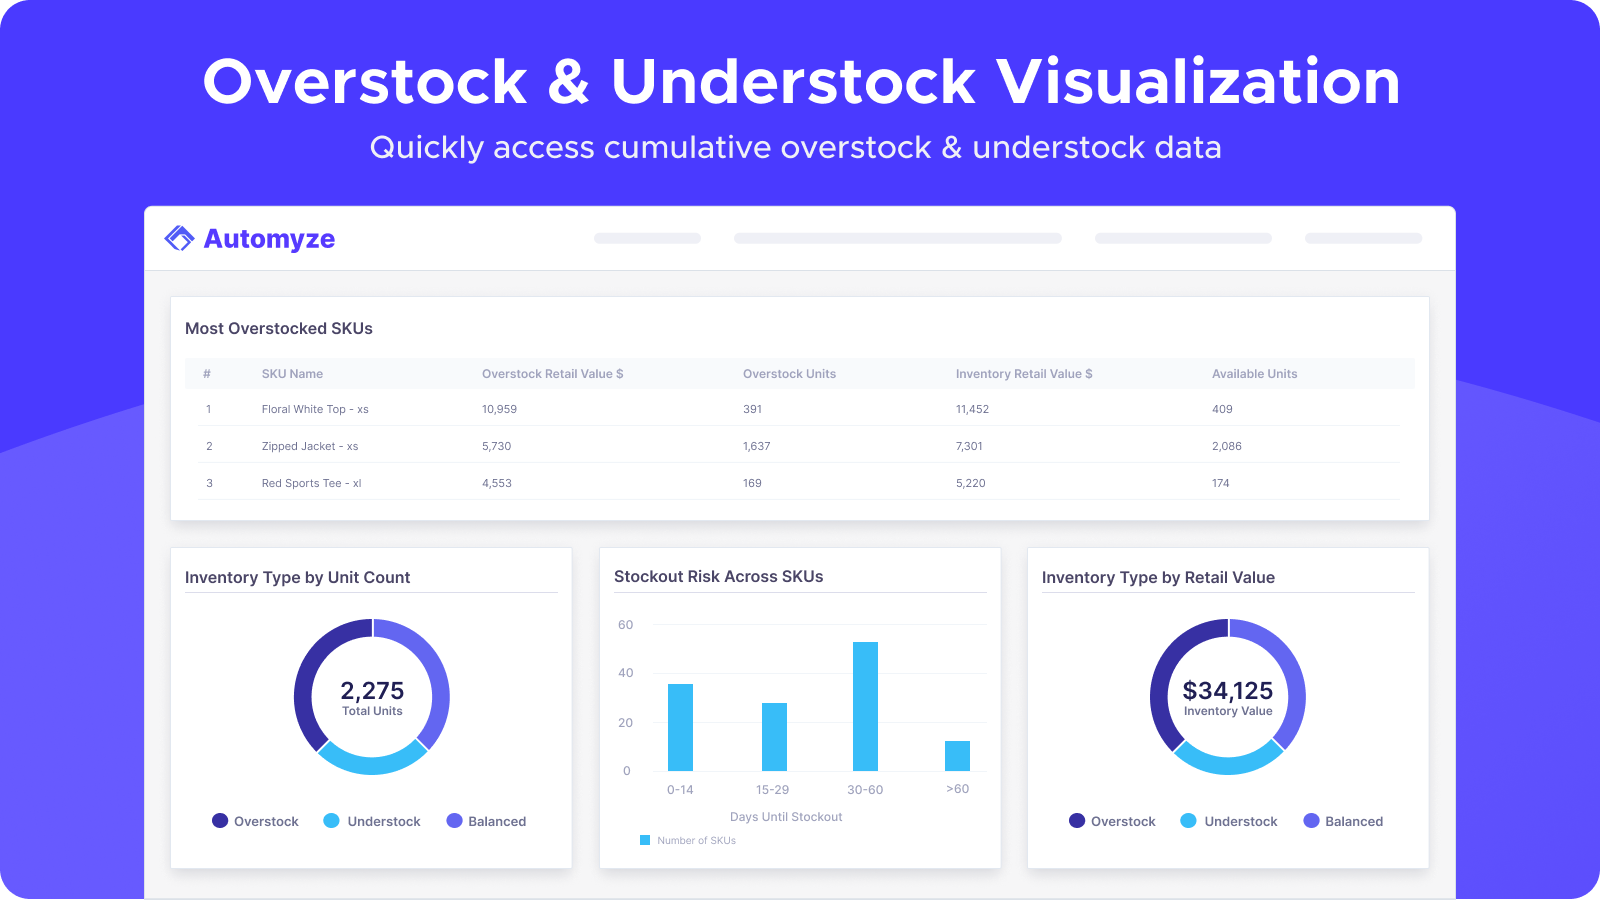 Quickly access cumulative overstock & understock data